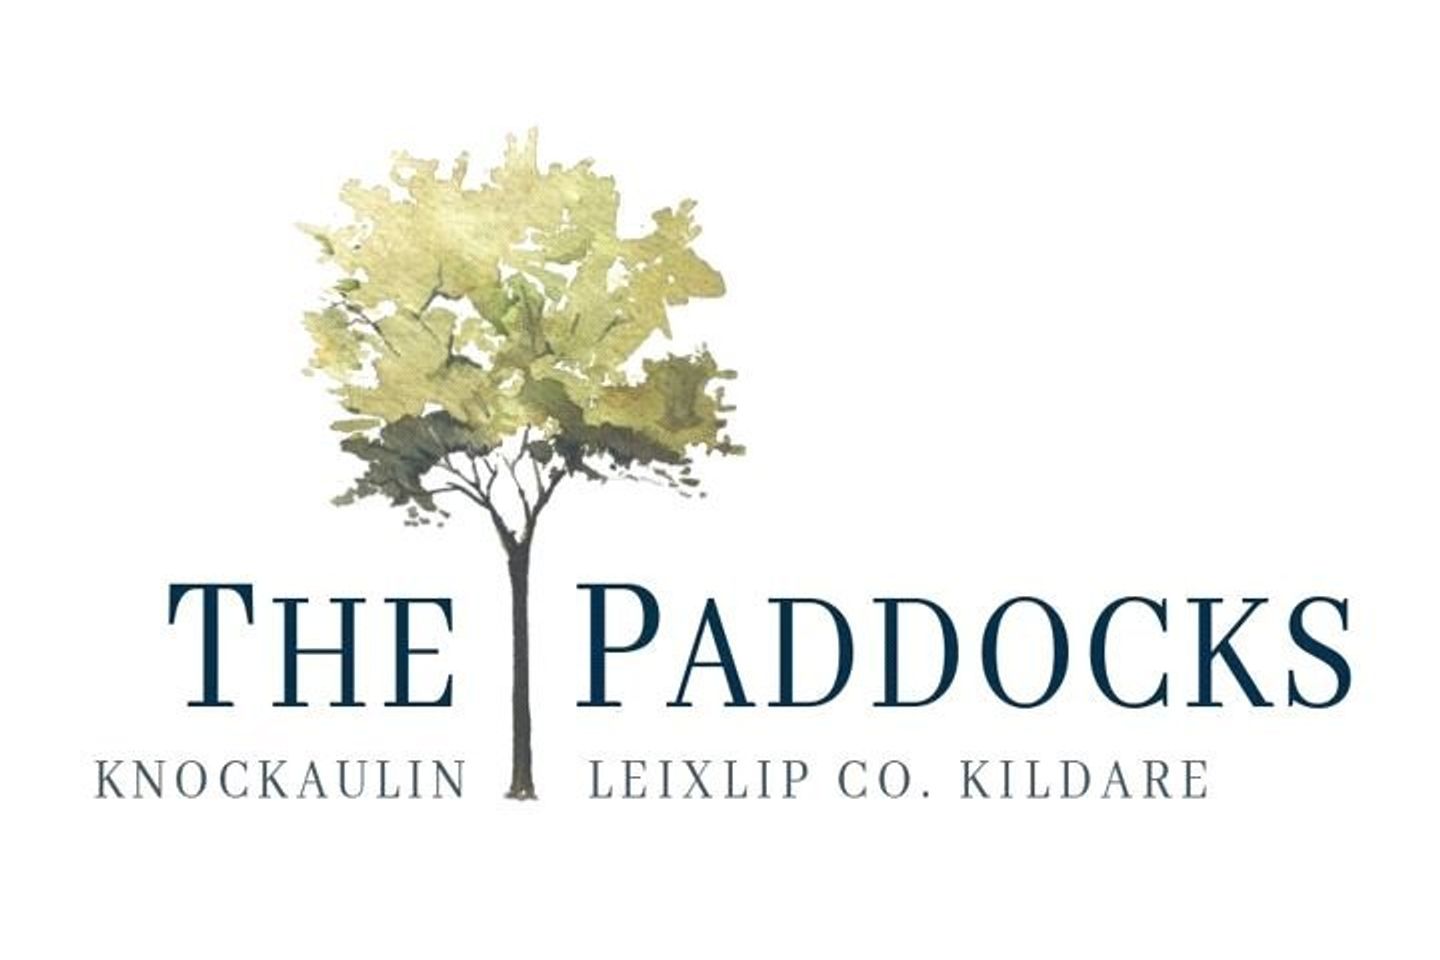 Large 4 Bed + Study, The Paddocks, Large 4 Bed + Study, The Paddocks, Knockaulin, Leixlip, Co. Kildare